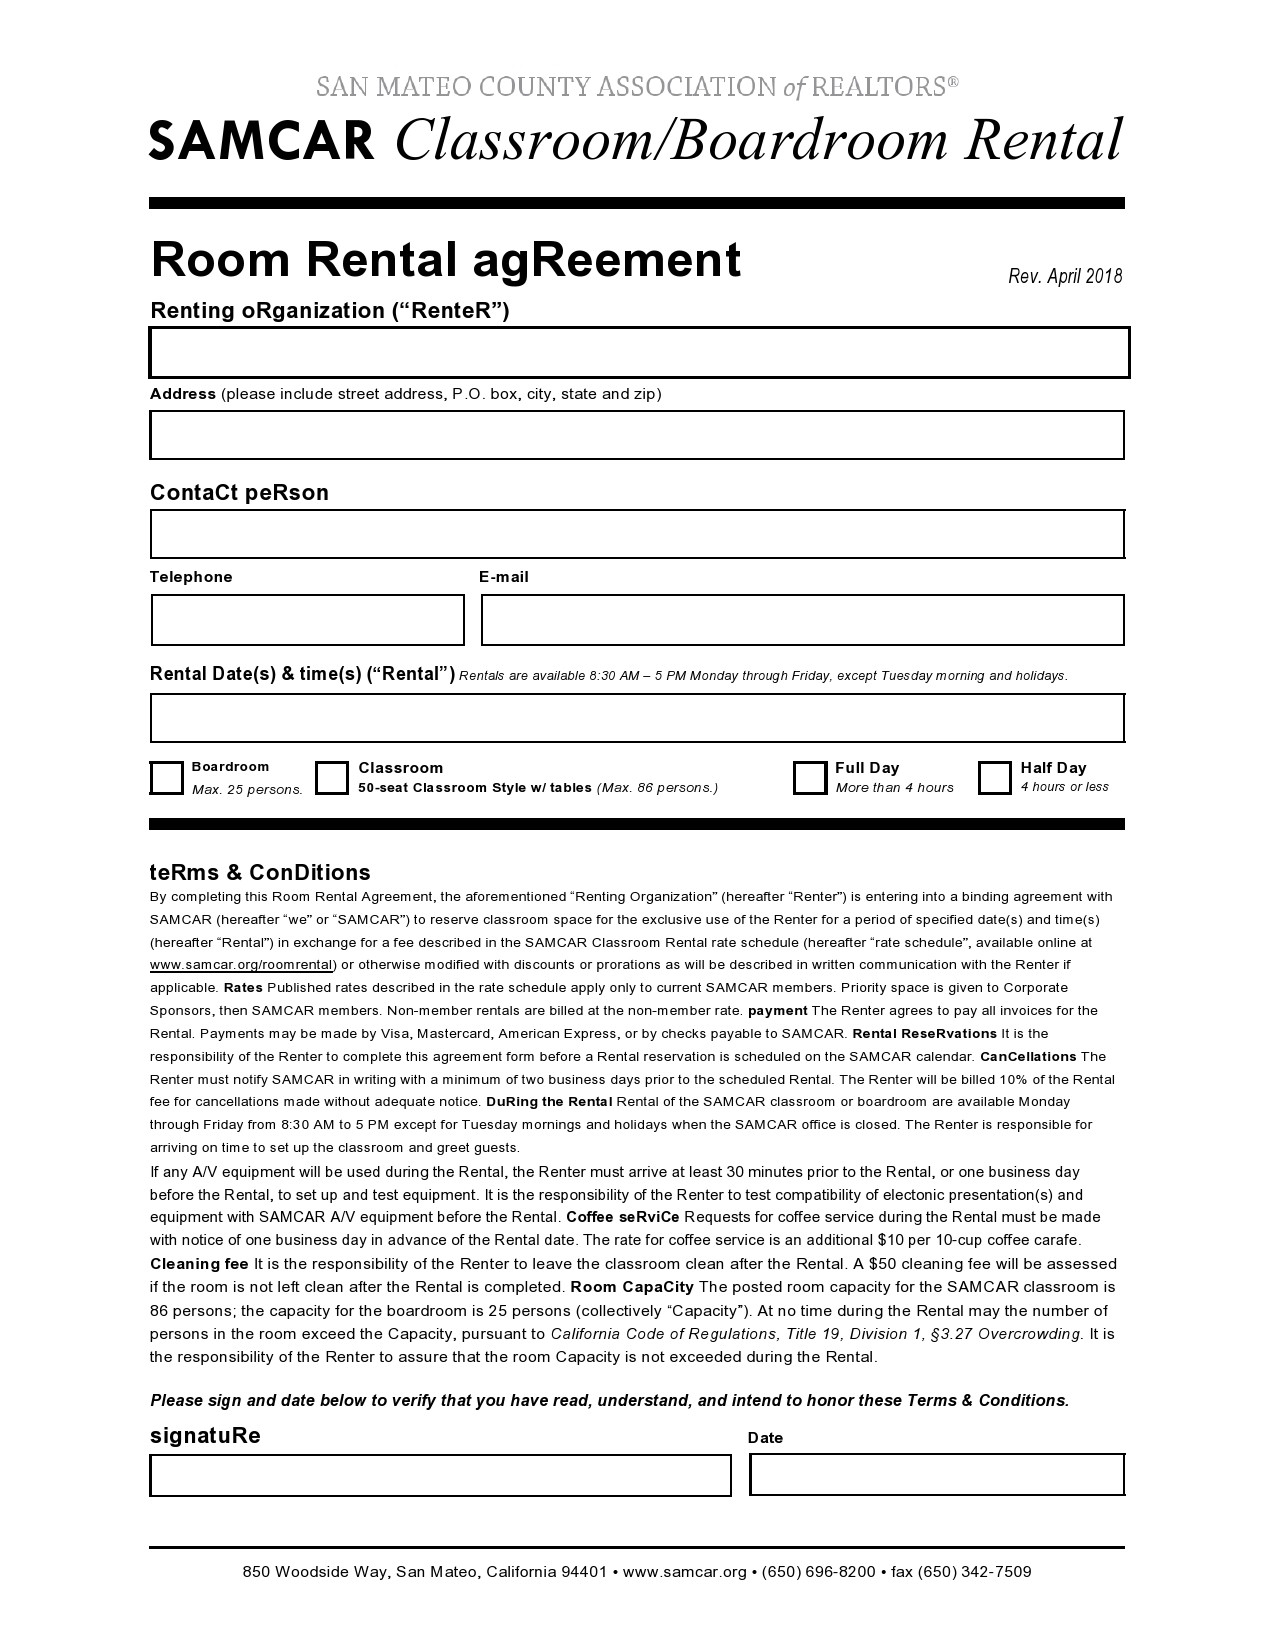 Free room rental agreement 14